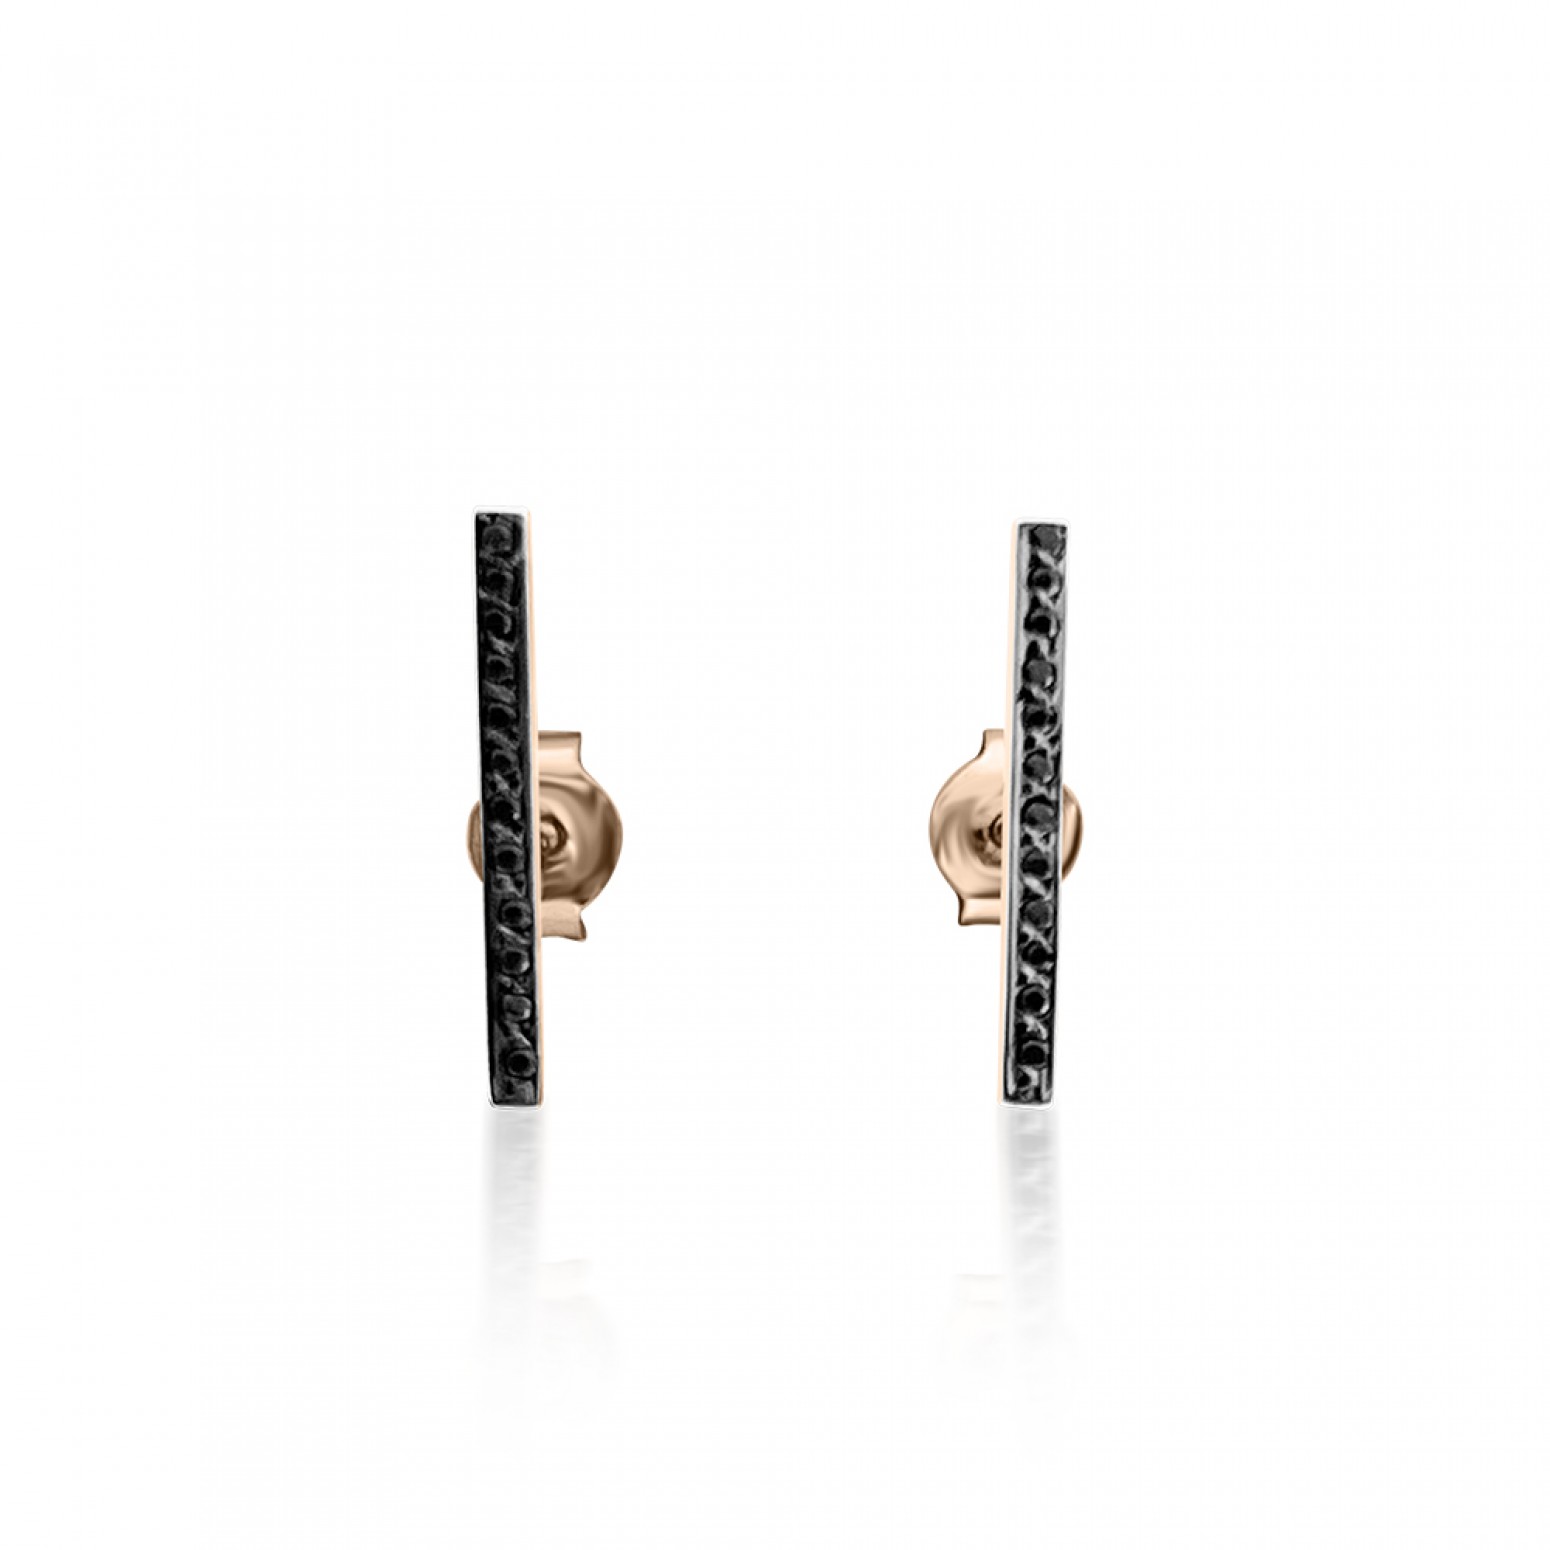 Bar earrings K9 pink gold with black zircon, sk3482 EARRINGS Κοσμηματα - chrilia.gr